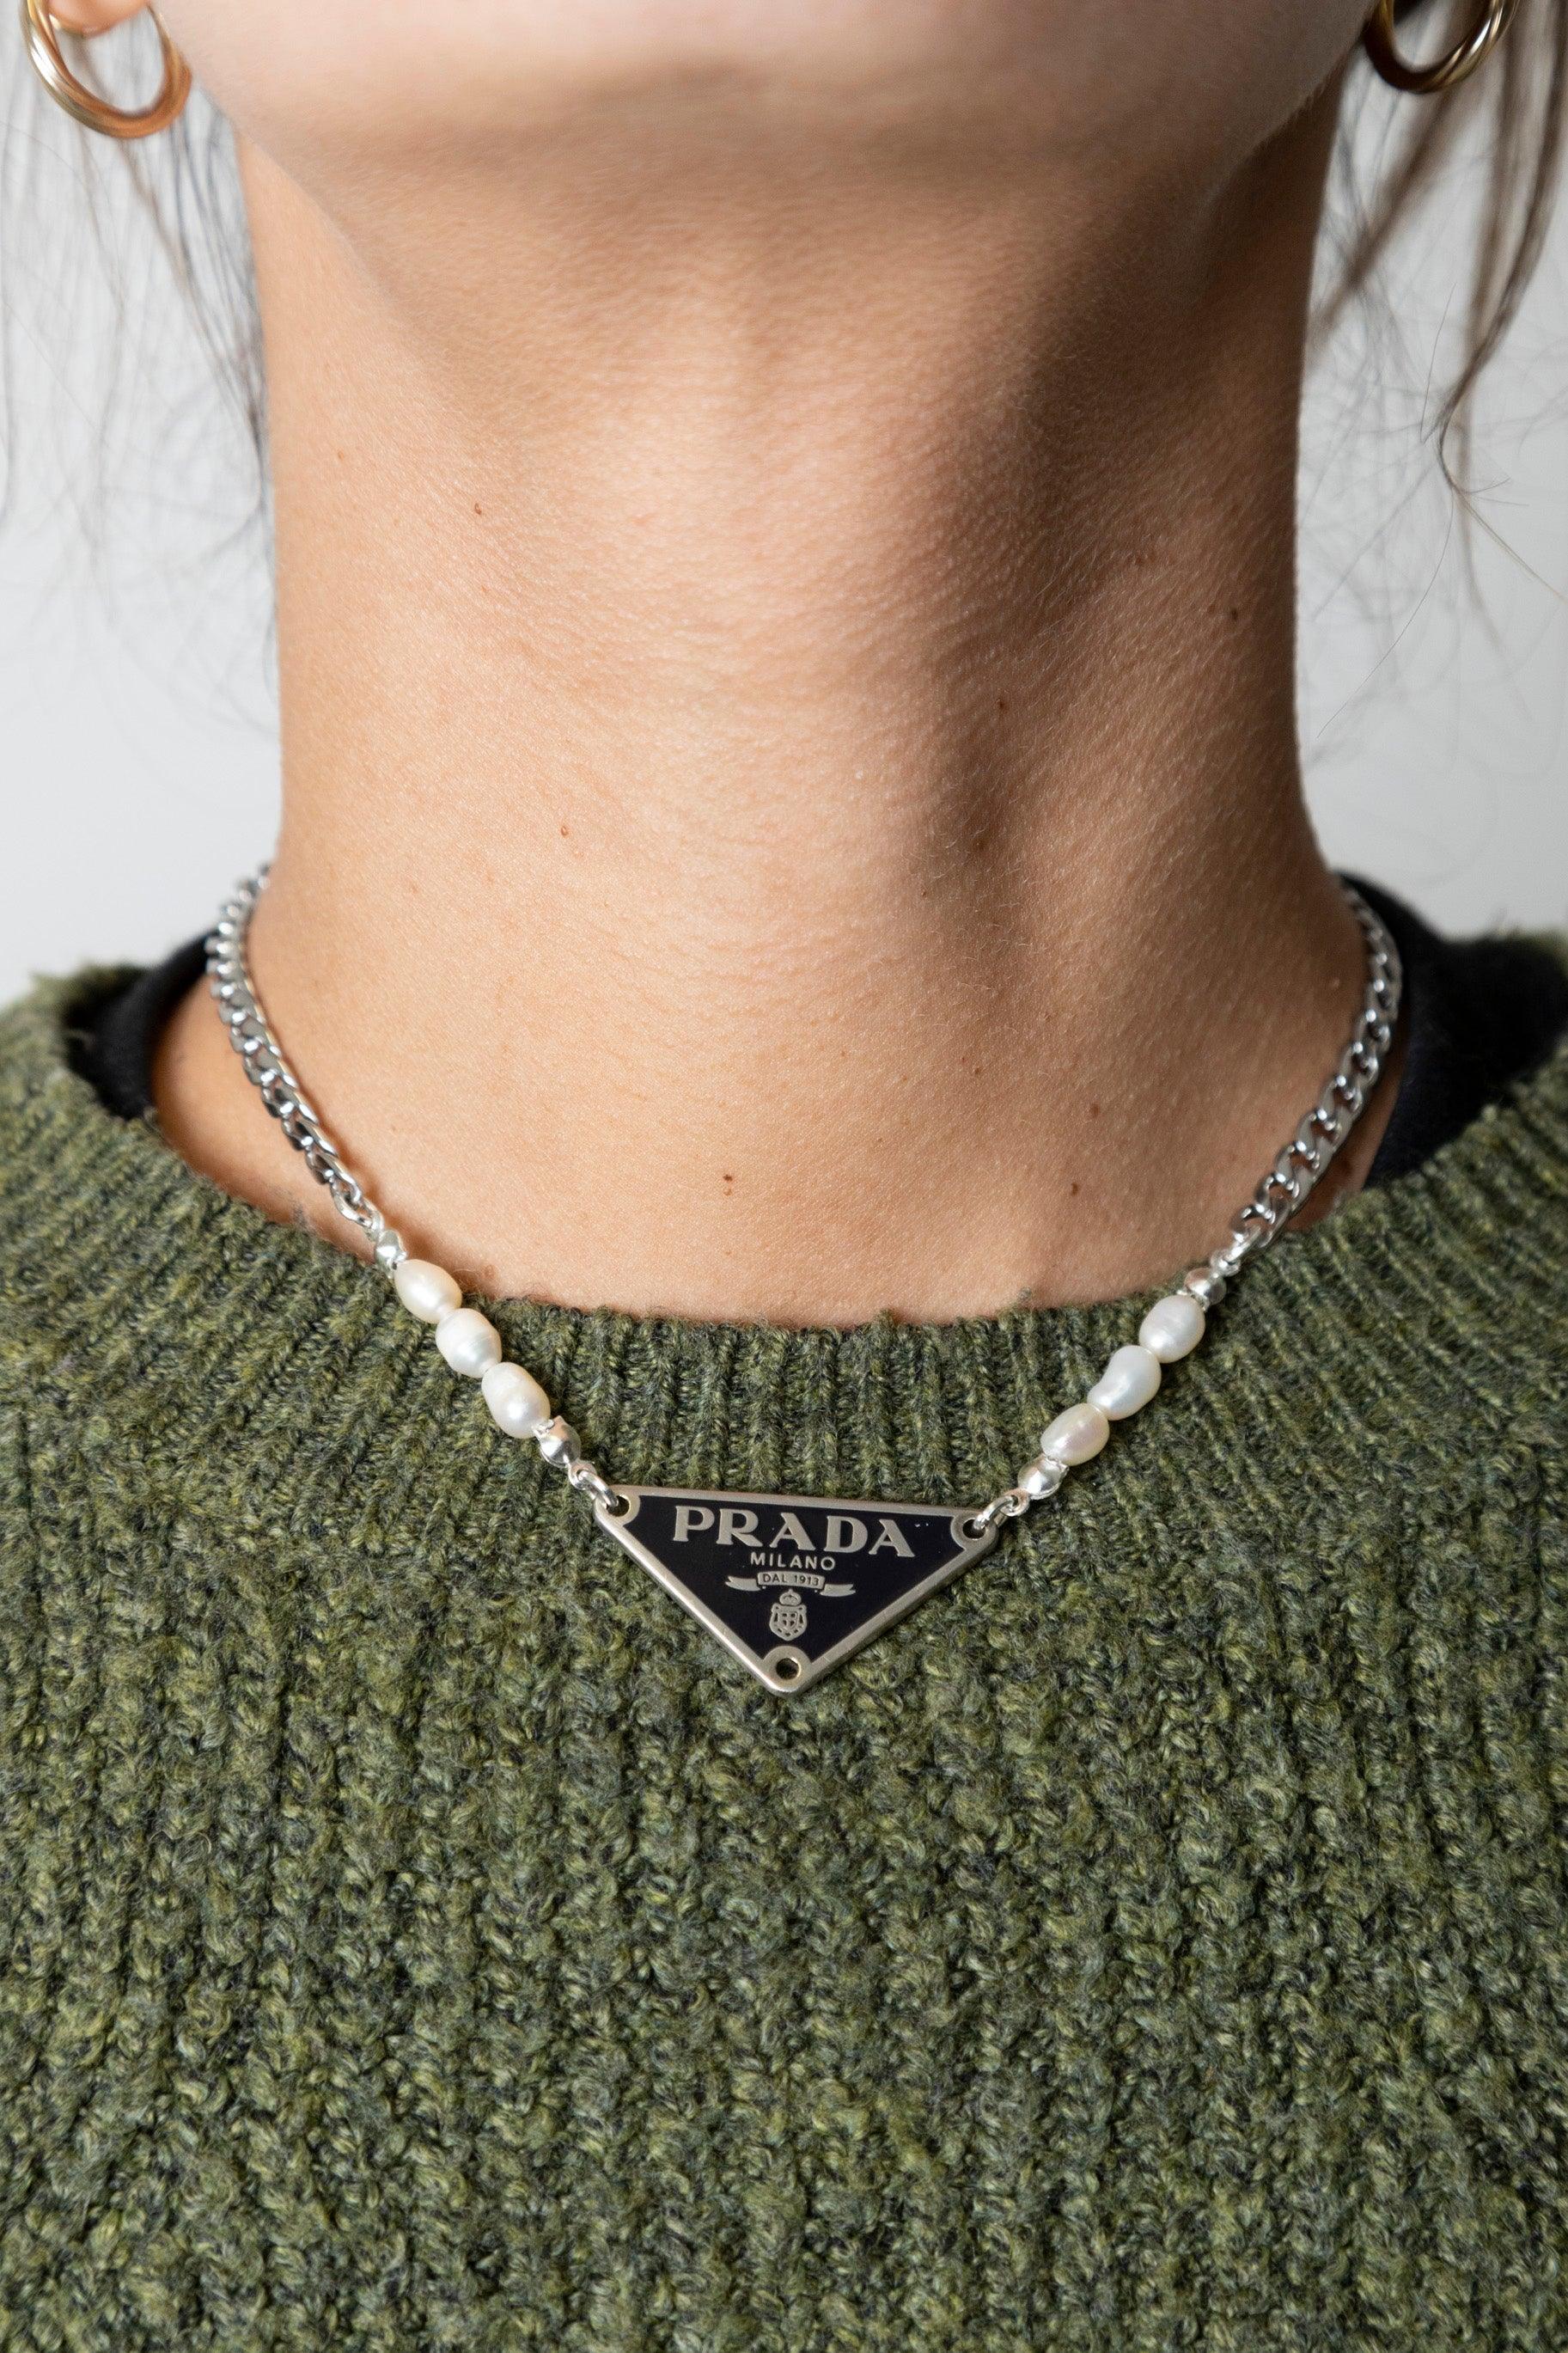 Rework Vintage Prada Emblem on Figaro Chain Necklace – Relic the Label